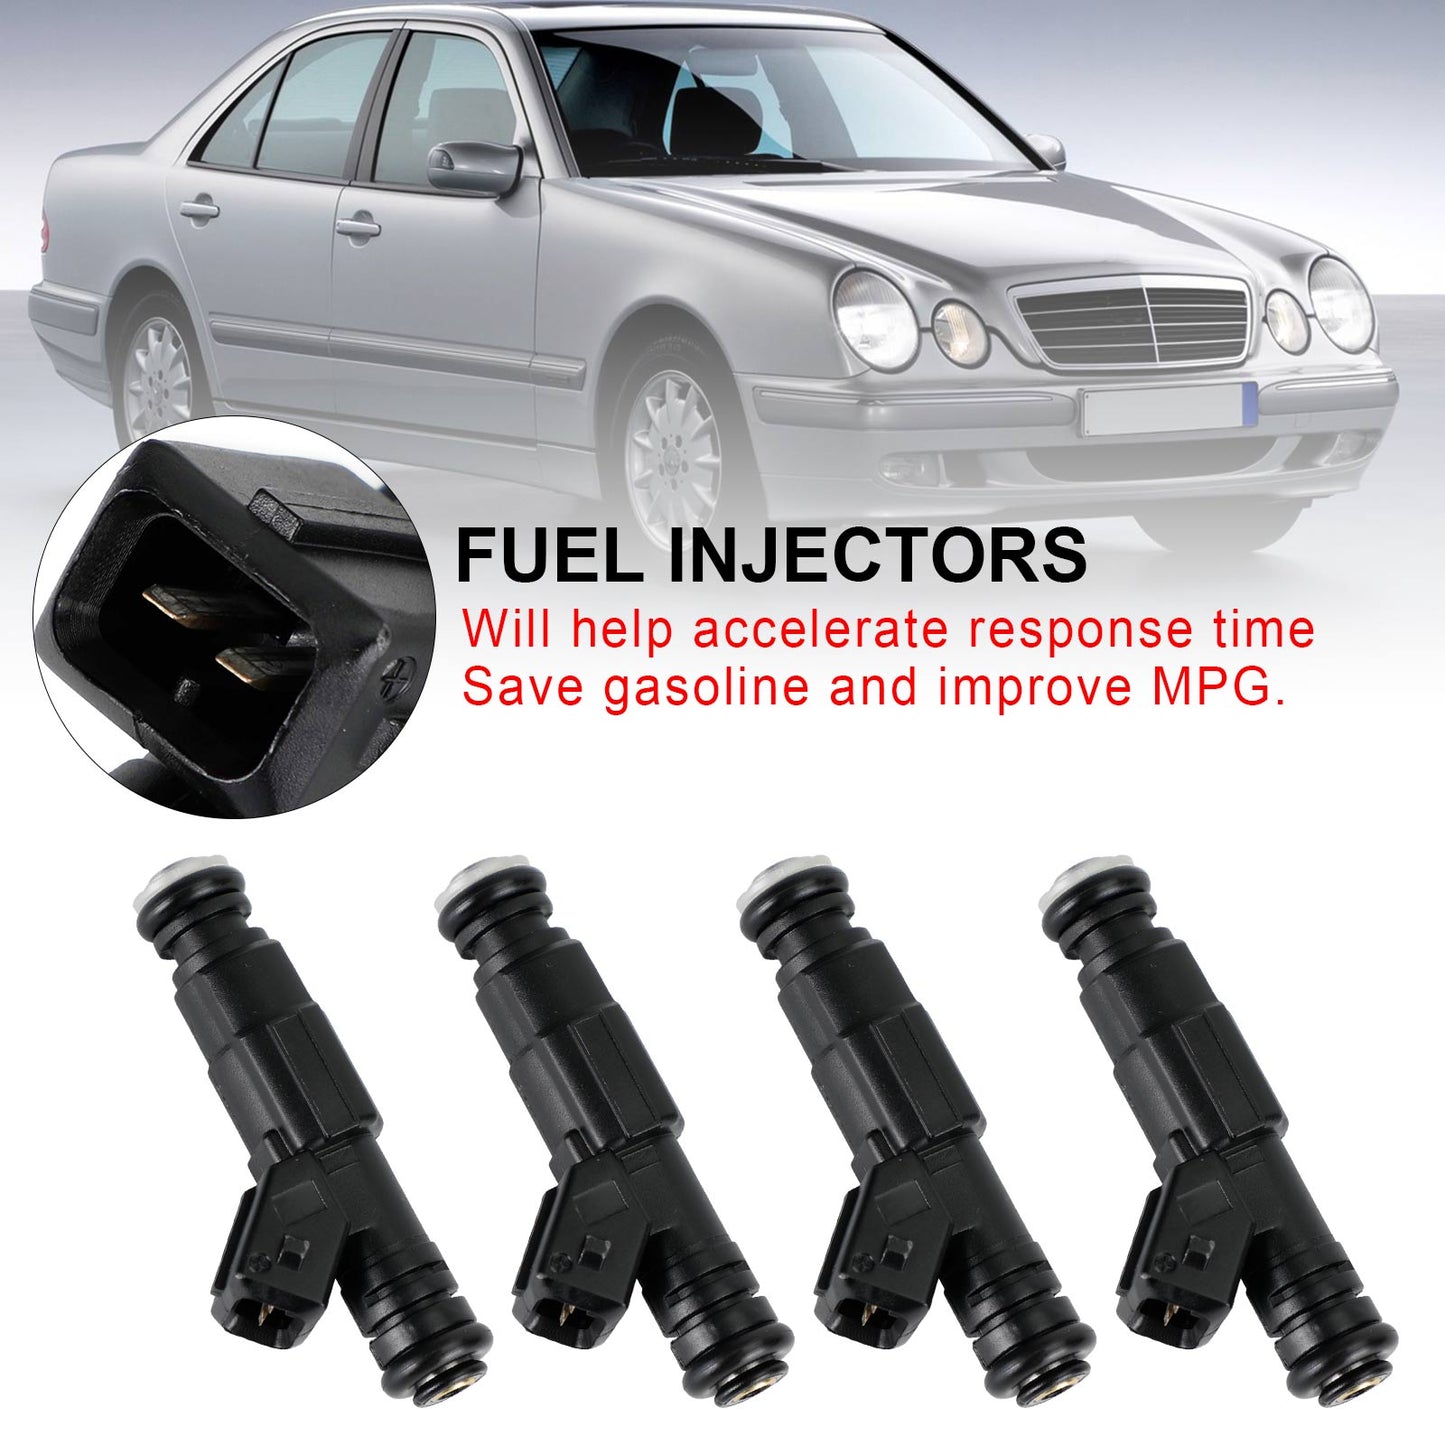 4PCS Fuel Injector 0280155821 Fit Mercedes-Benz W124 R129 W140 W202 W210